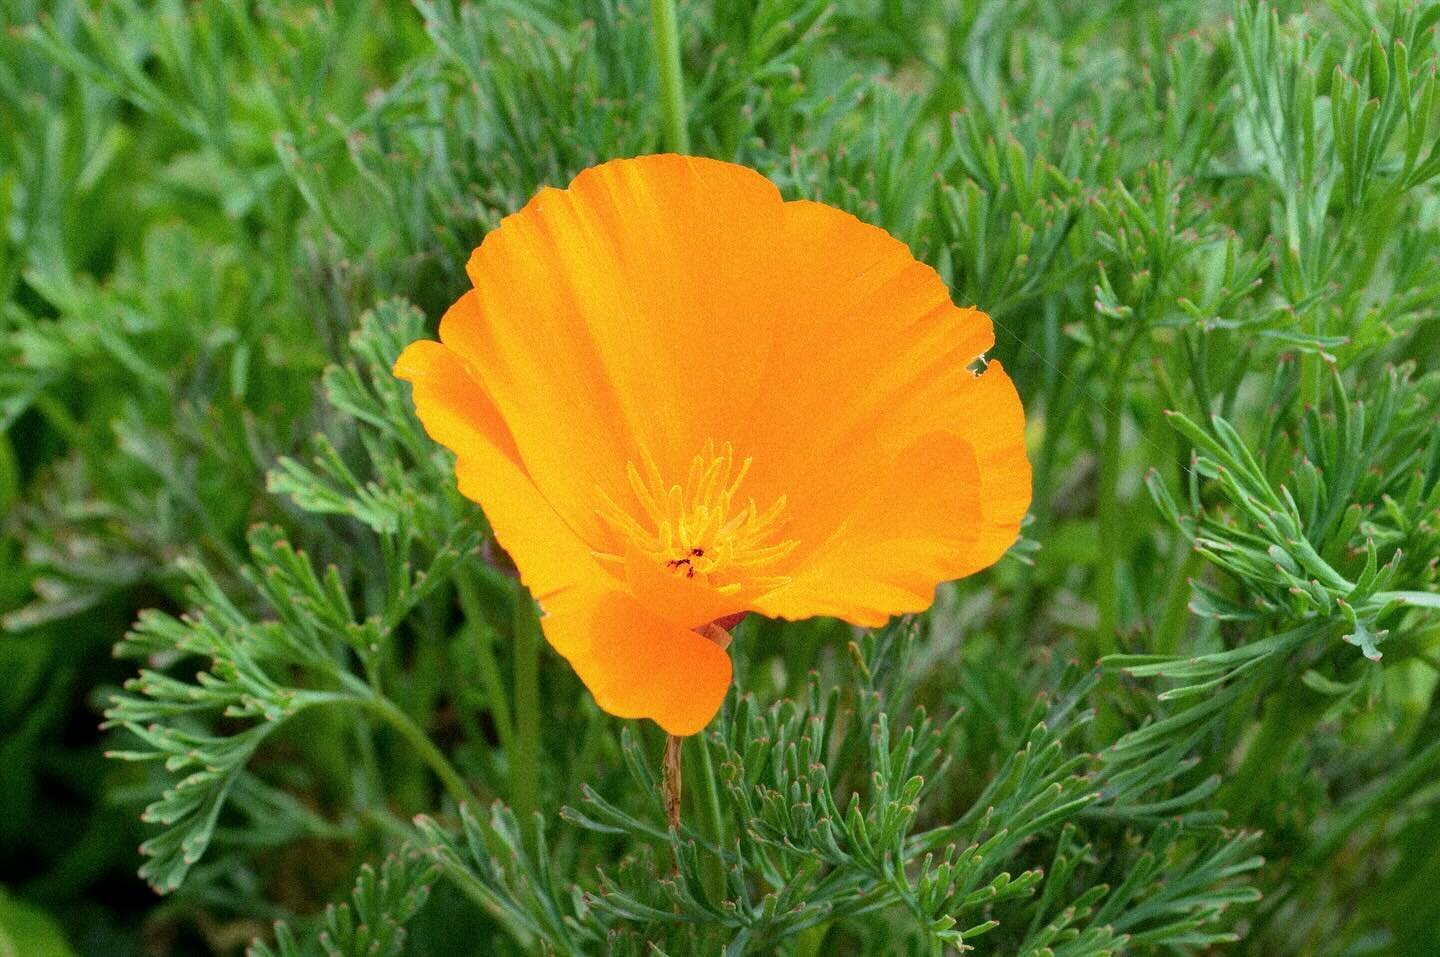 California poppy, my all time favorite flower.

.
.
.
.
#californiapoppy #flowerphotos #californiaflowers #bigsurcoast #orangeflower #orangeflowers #californiastateflower #orangepoppy #poppyflower #californiagirls #californiaborn #californiaraised #c